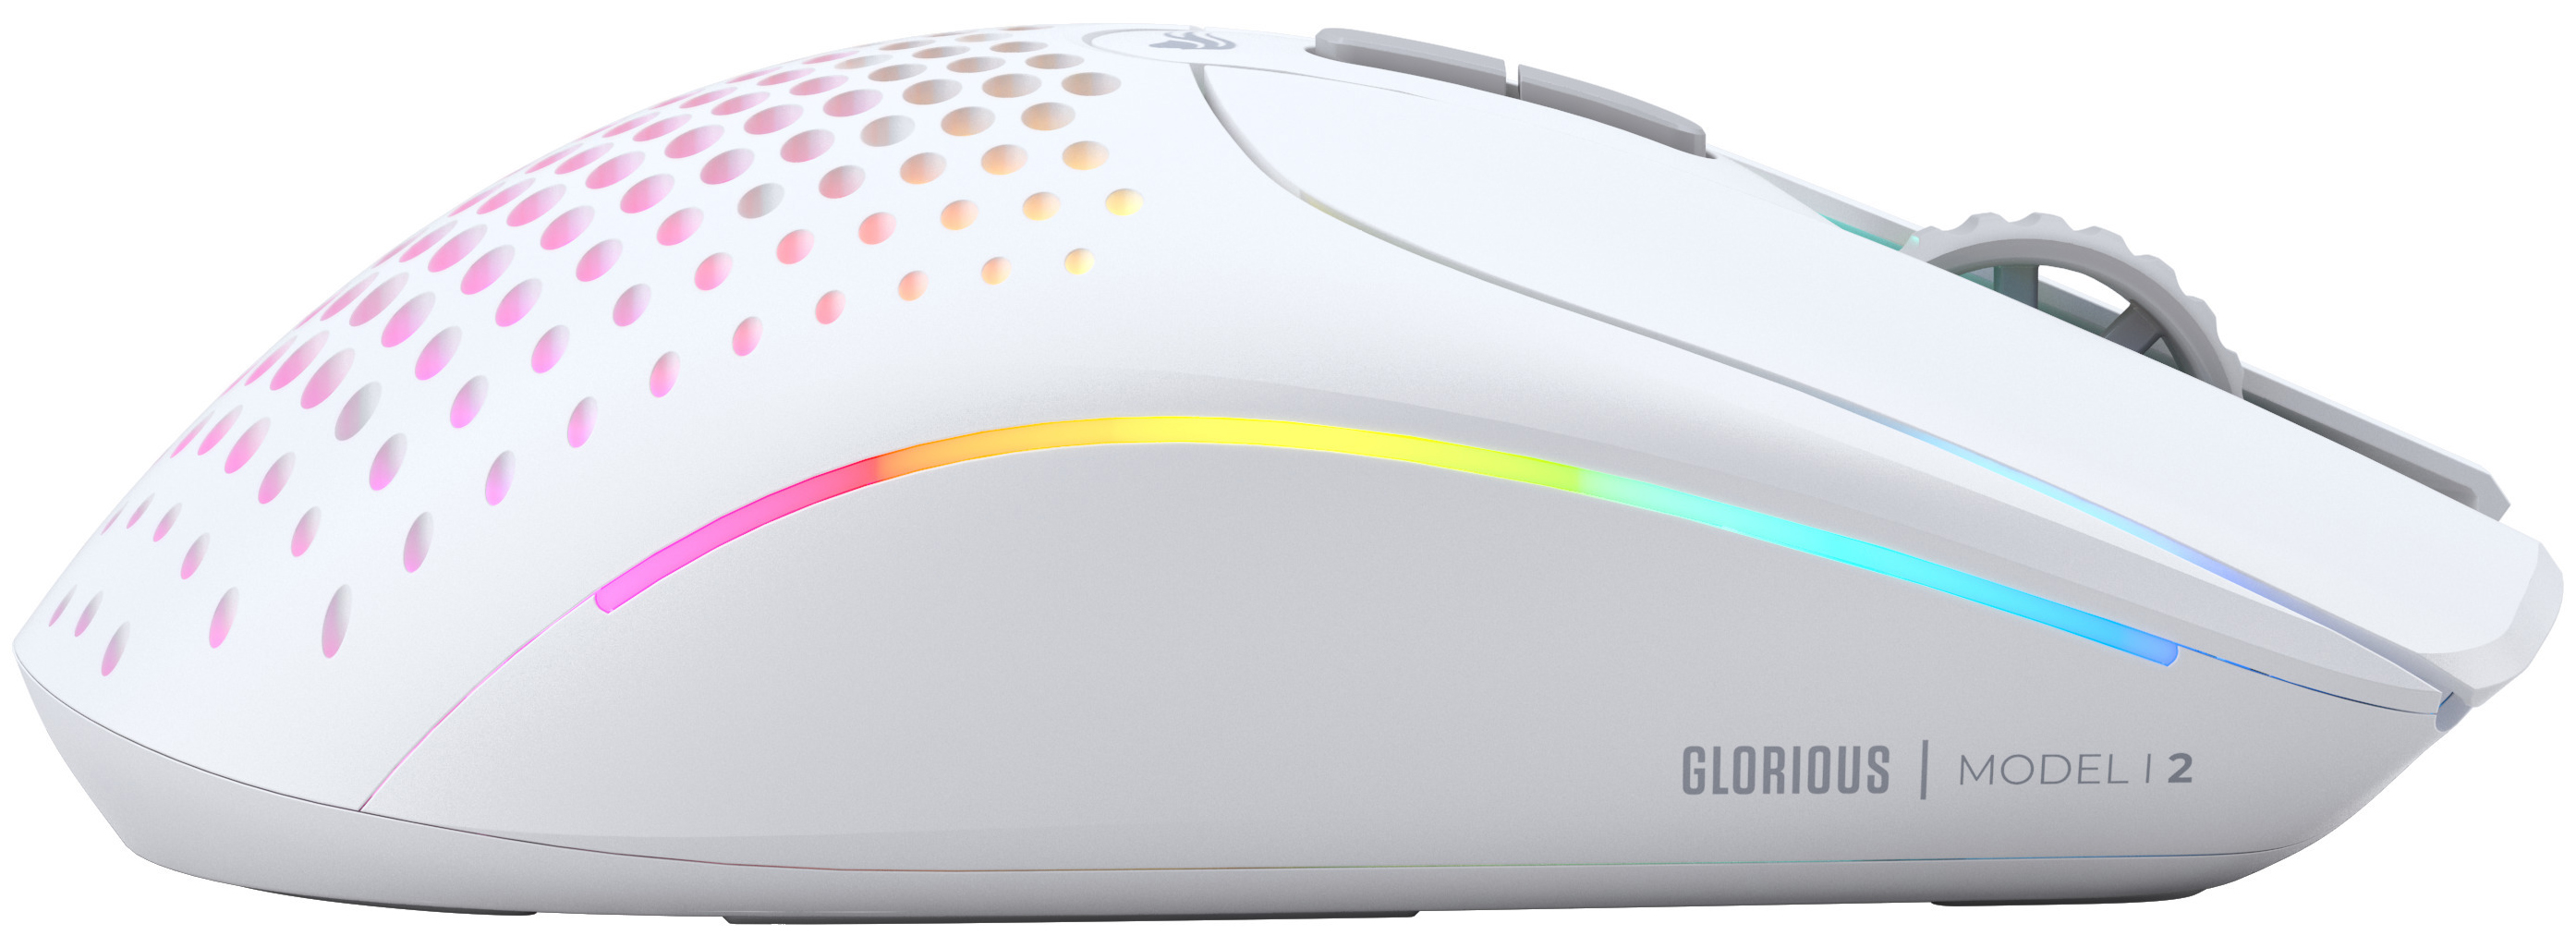 Glorious - Ratón Gaming Glorious Model I 2 Wireless Blanco